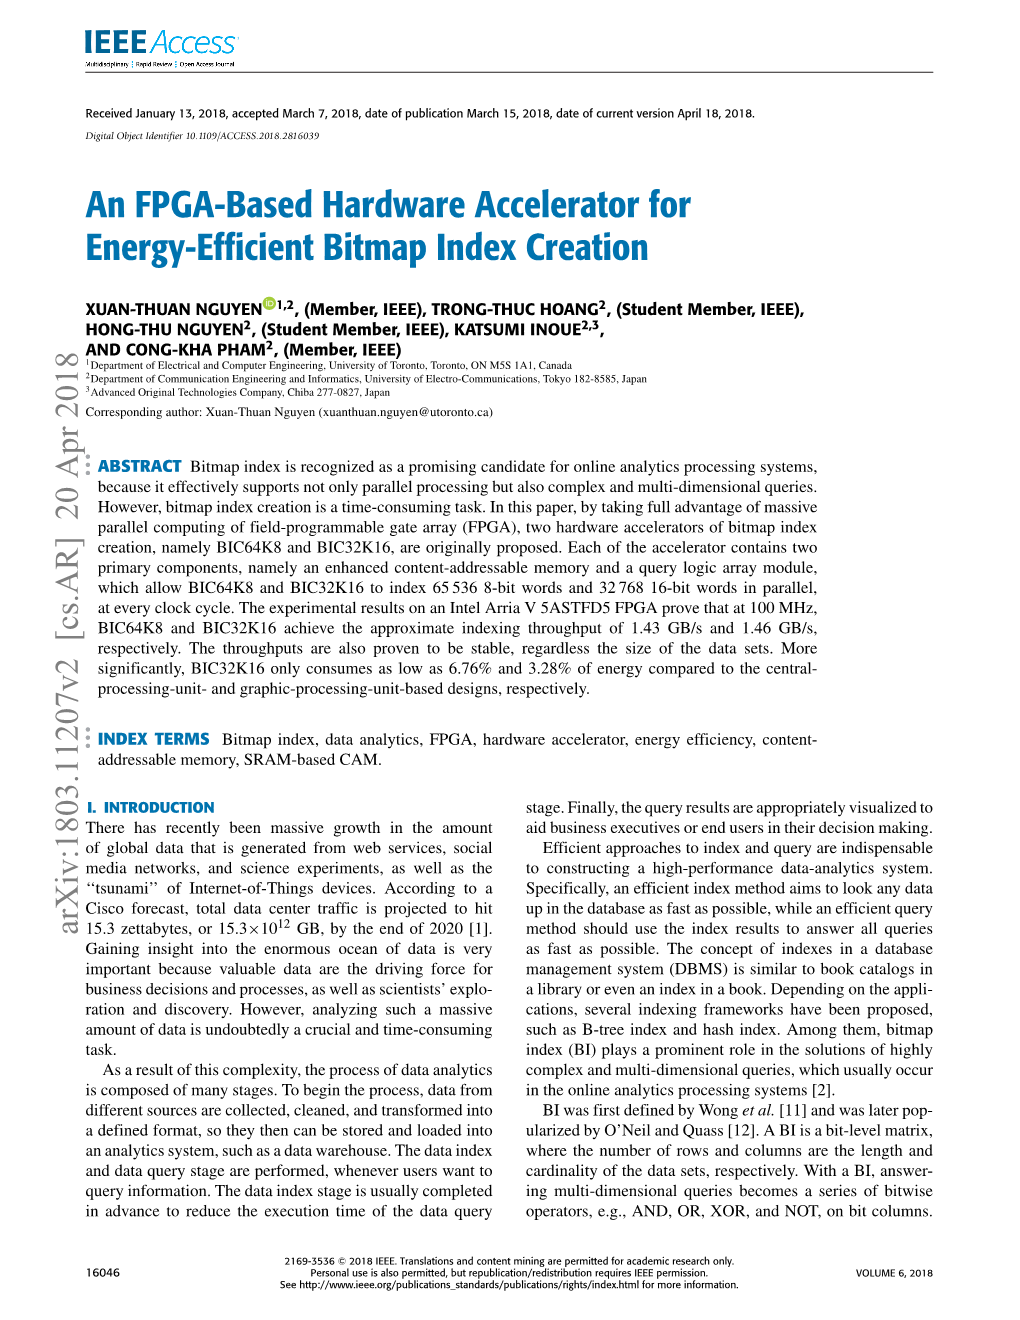 An FPGA-Based Hardware Accelerator for Energy-Efficient Bitmap Index Creation